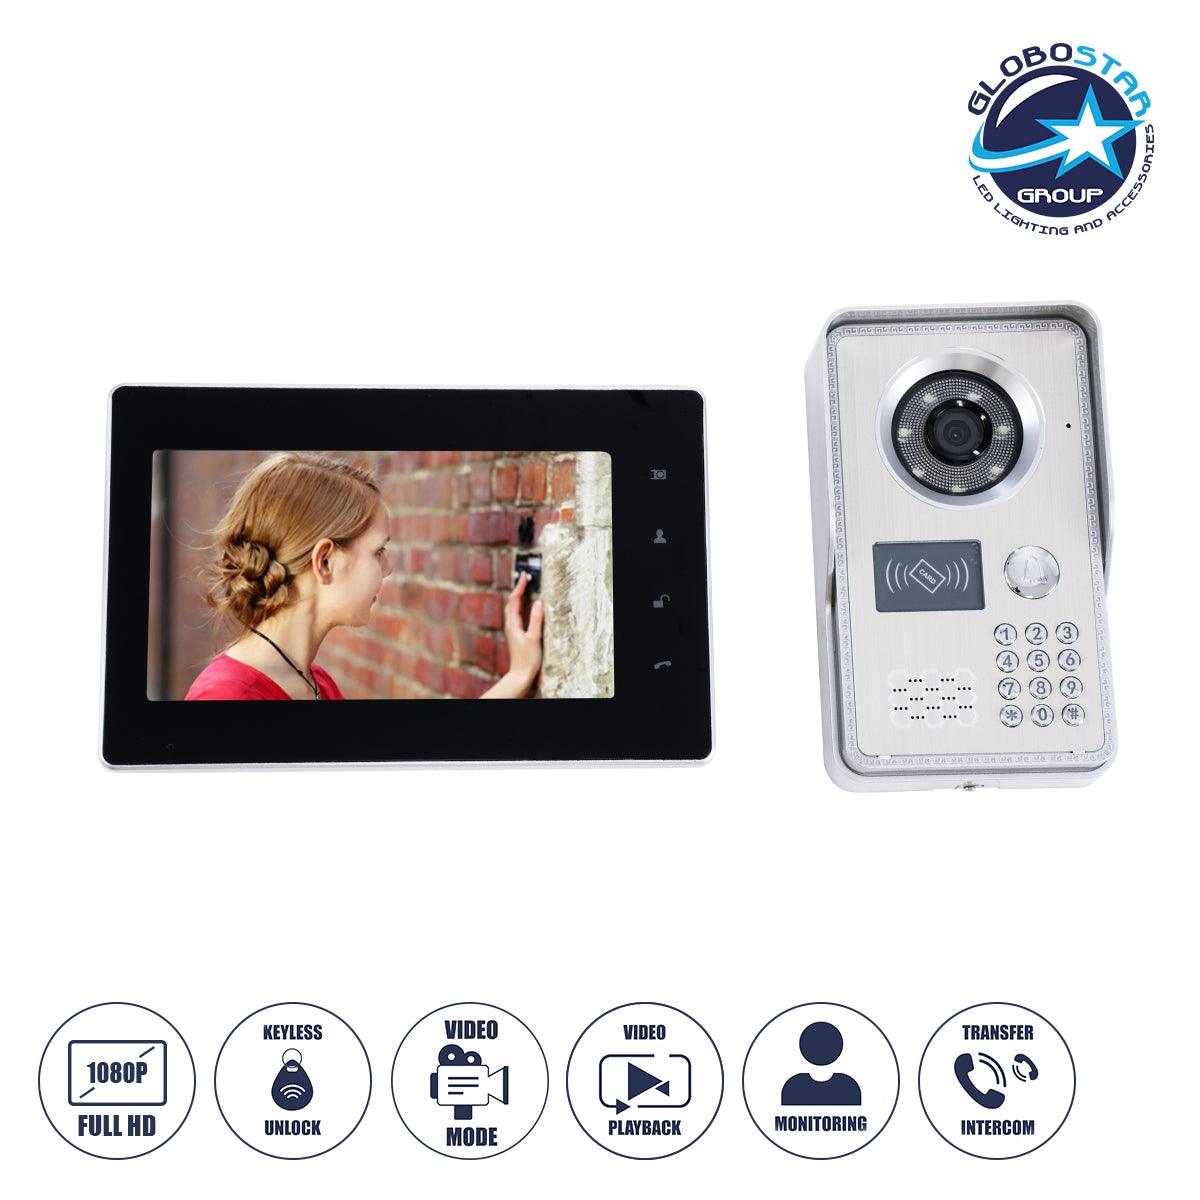 GloboStar® 86061 Σετ Θυροτηλεόρασης με Έγχρωμη Οθόνη Αφής 7" και Κάμερα 1080P HD & 4 Επαγωγικά Κλειδιά για Ηλεκτρονικές Κλειδαριές - Μαύρο - Ασημί - ledmania.gr